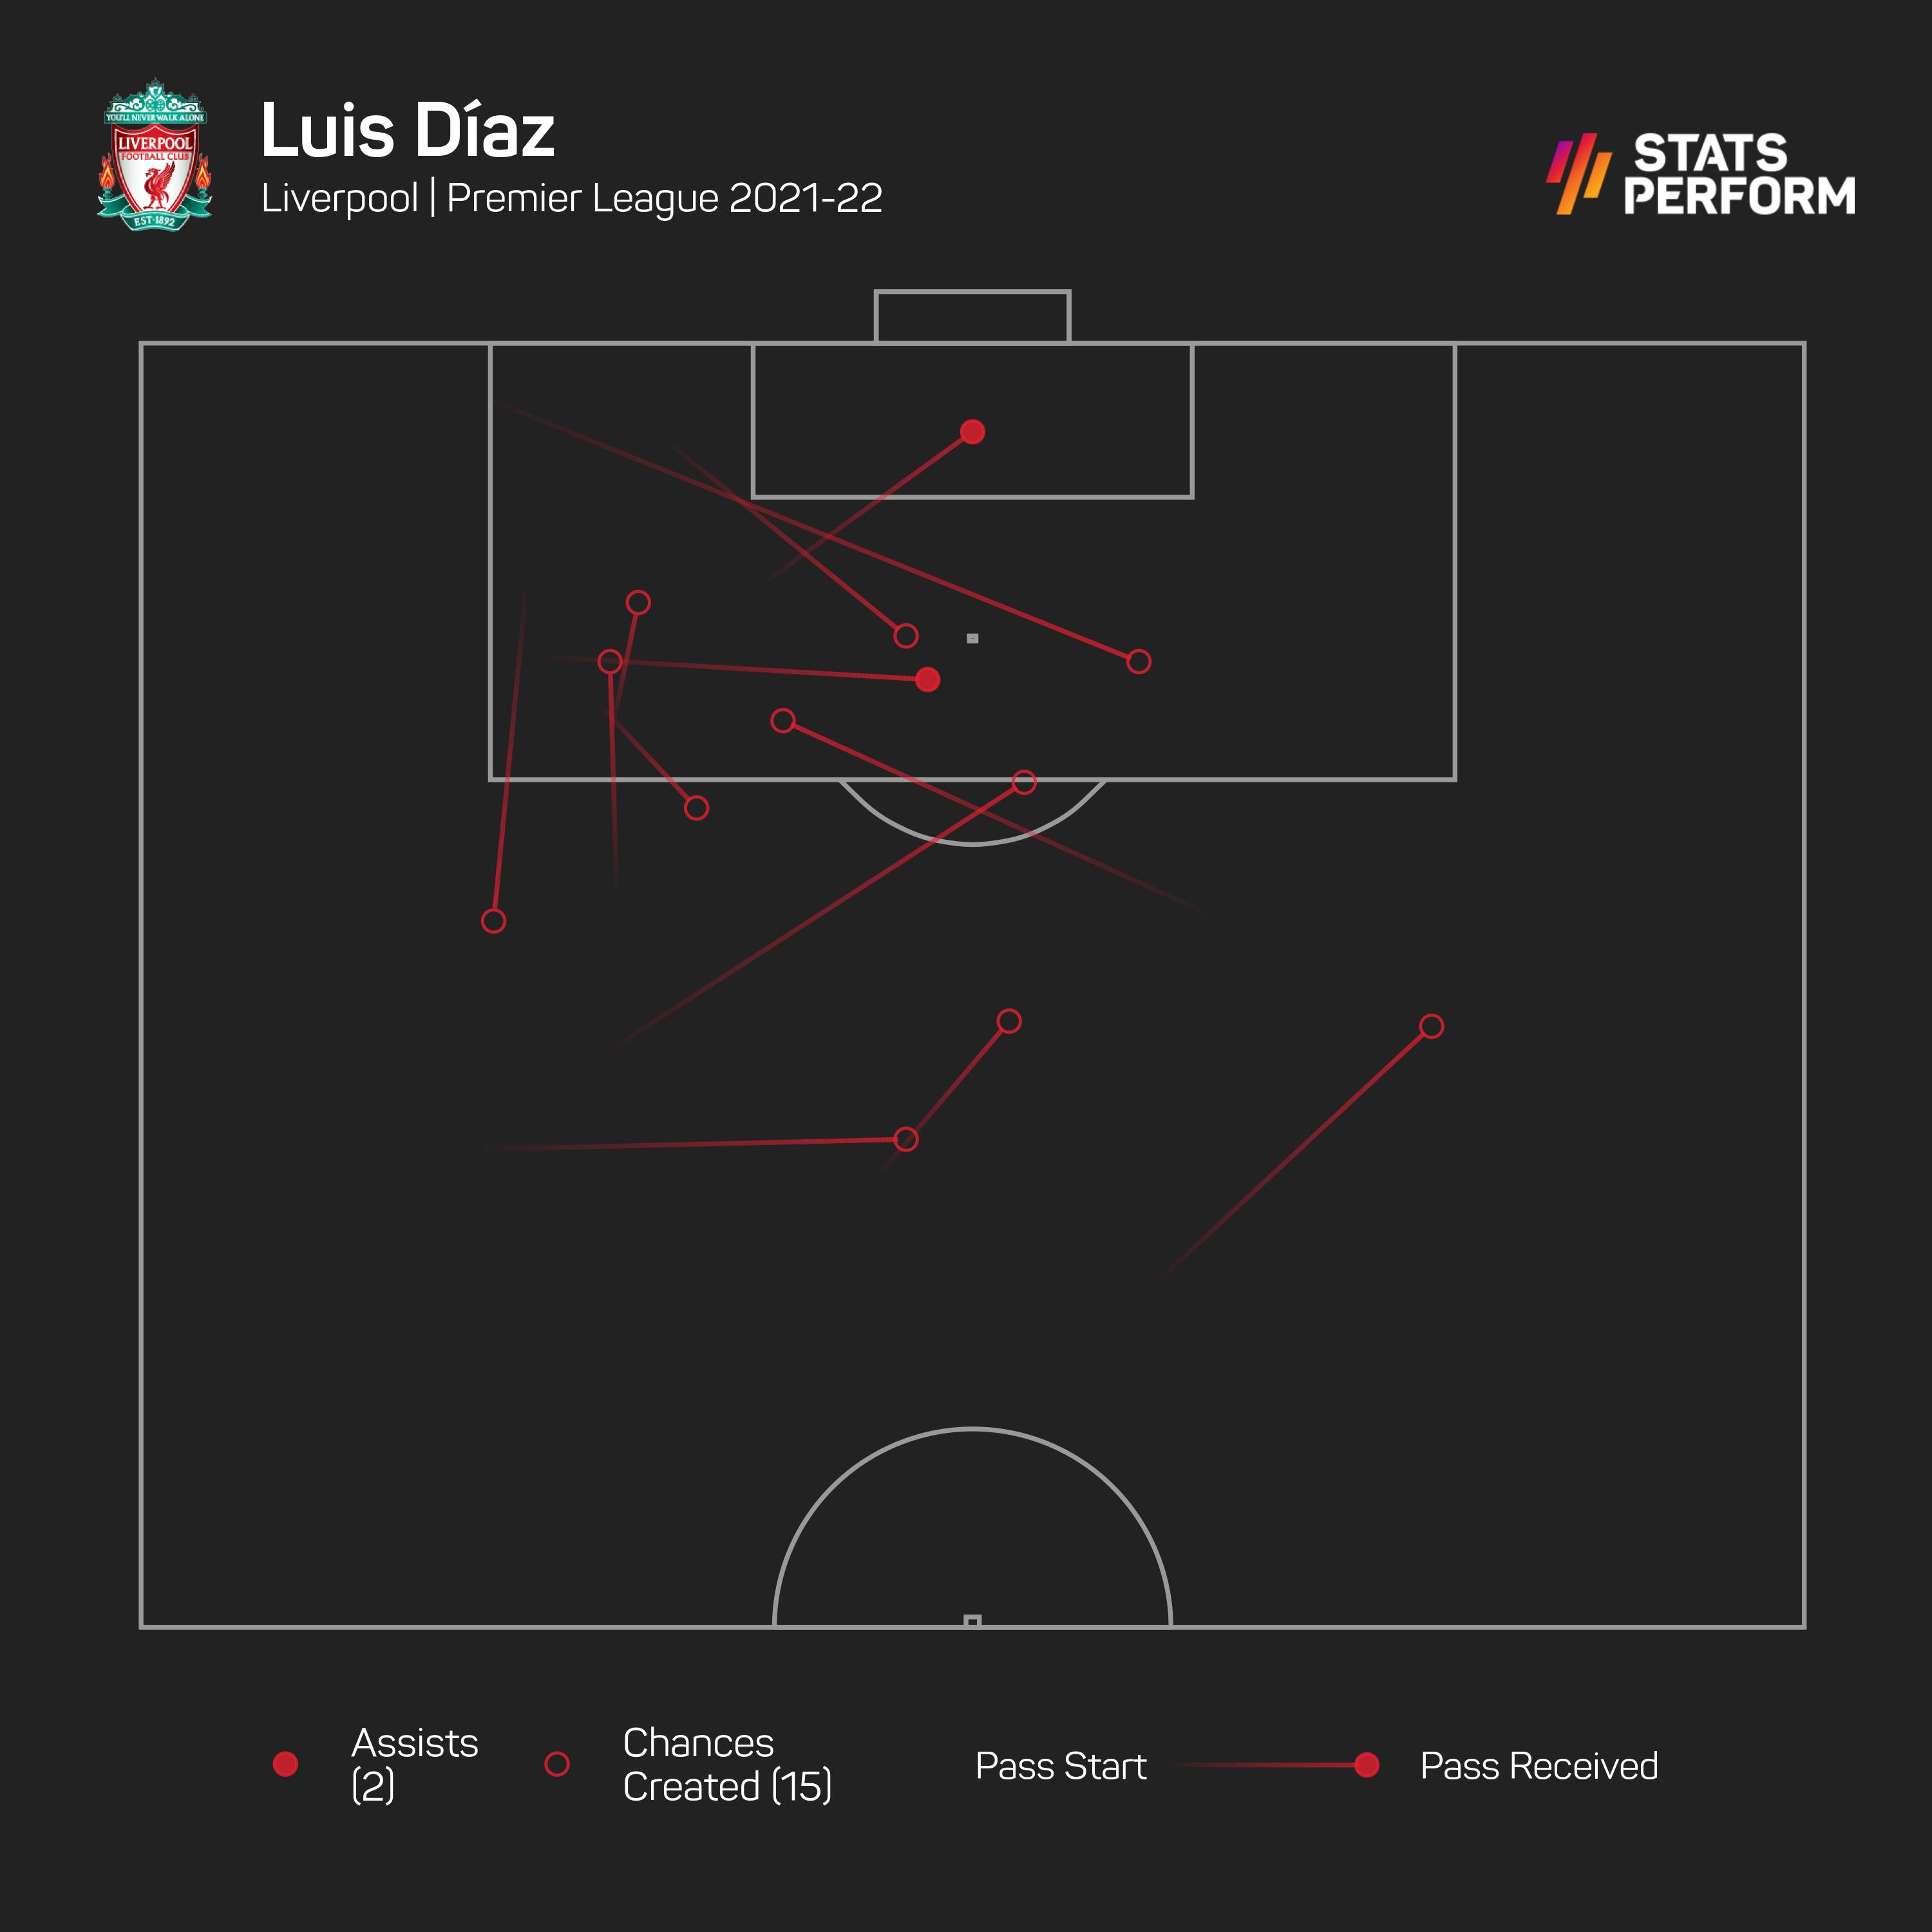 Luis Diaz chances created graphic